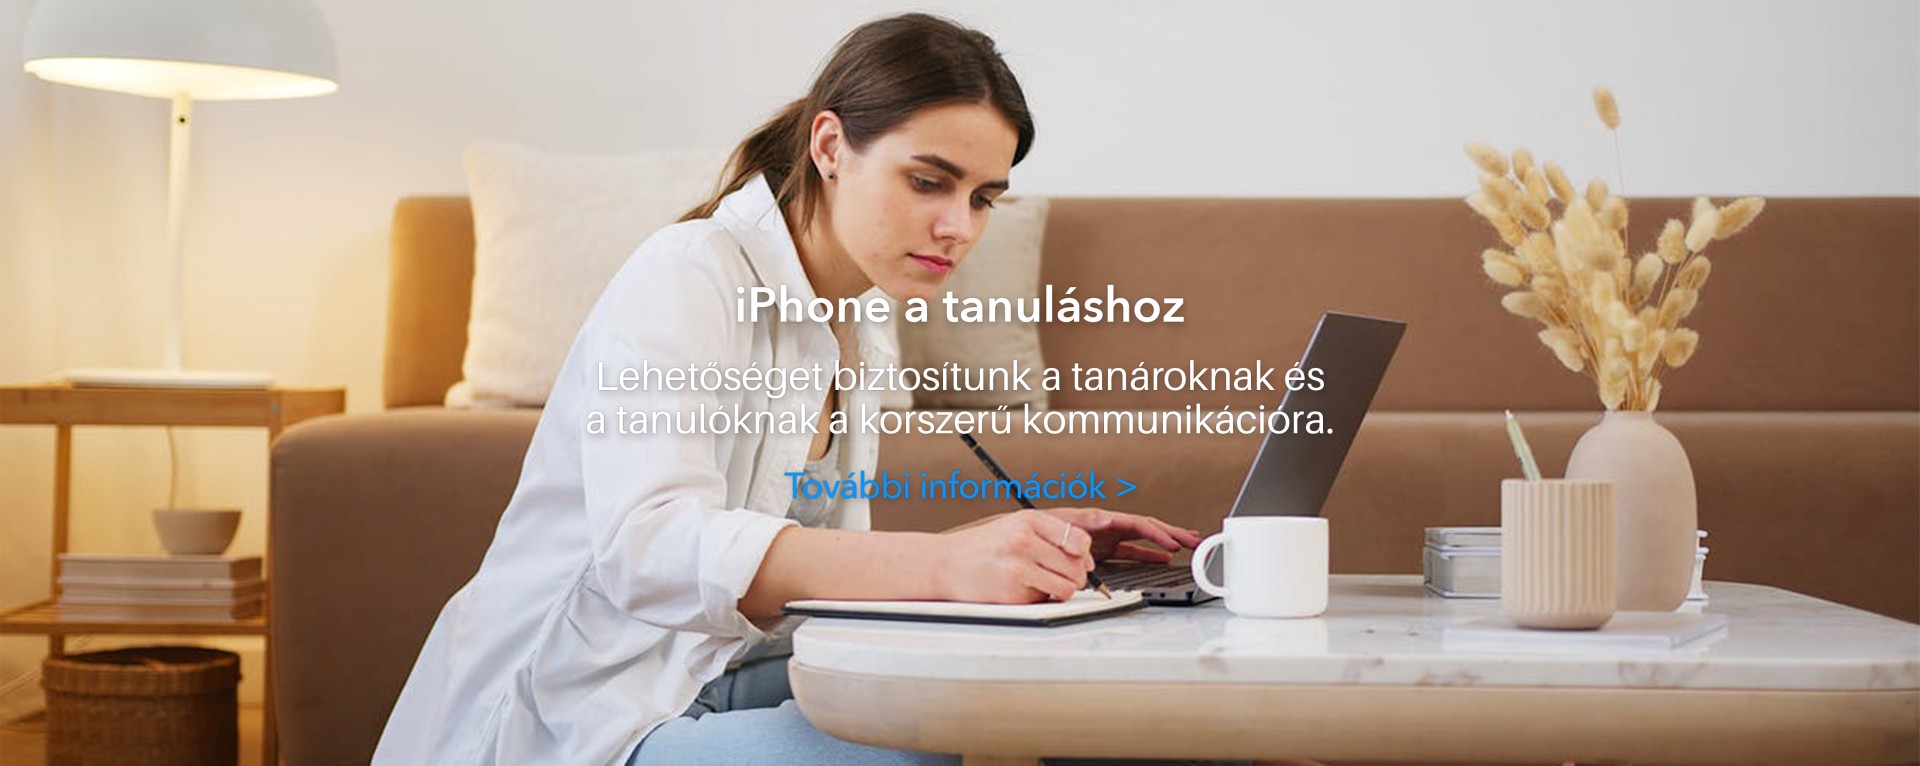 desktop tanulas-iglass-iphone-uvegfolia